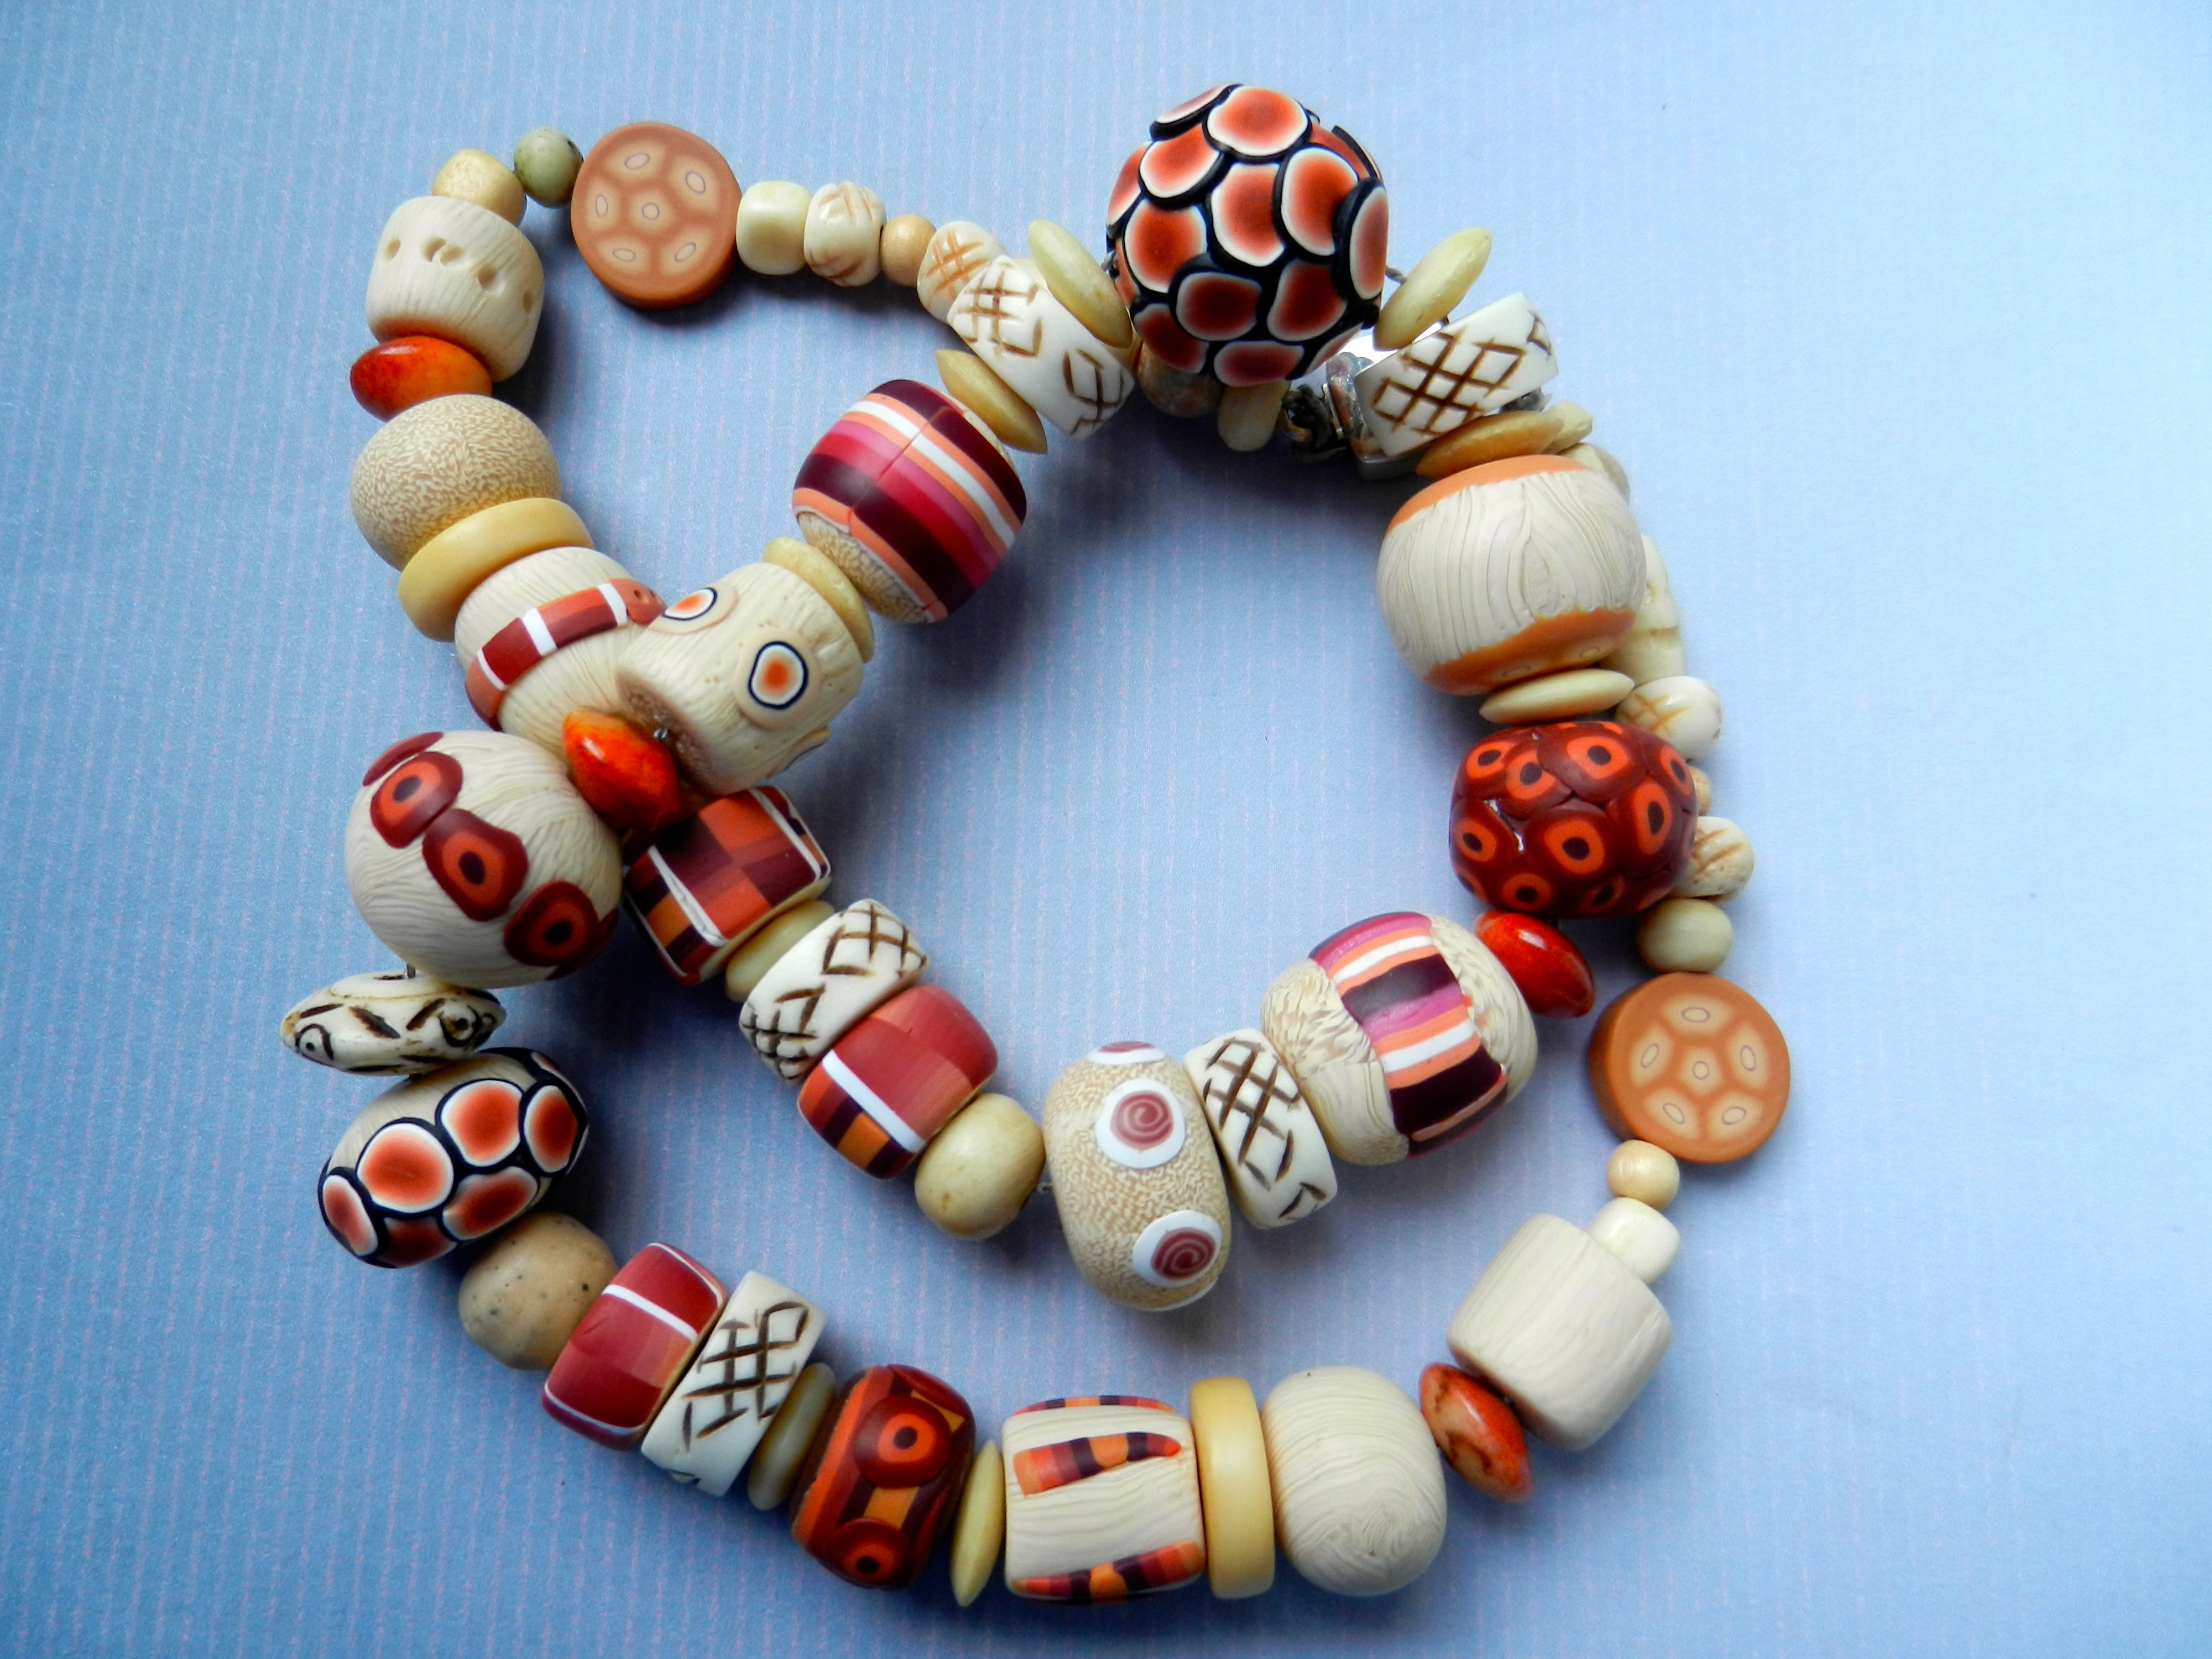 Spice island beads 